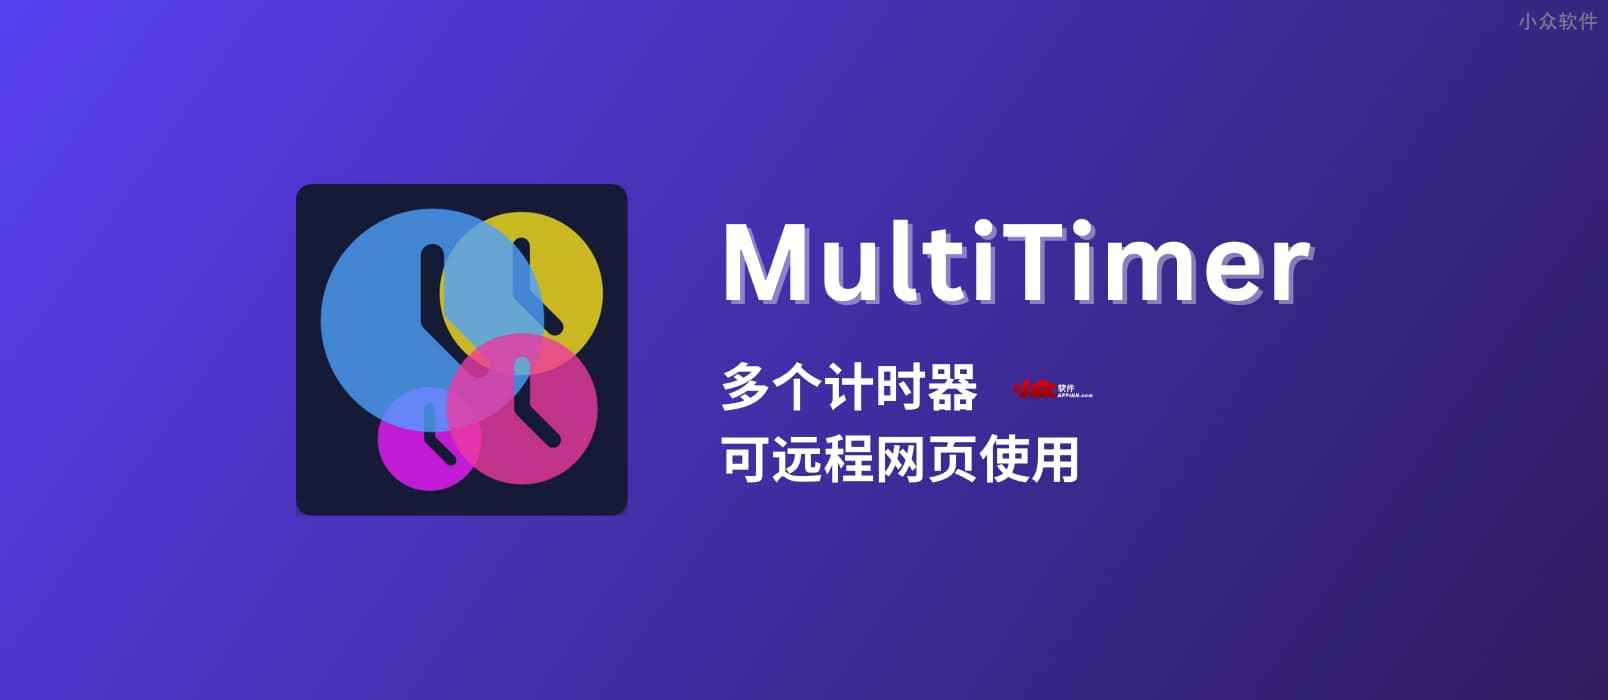 MultiTimer – 同时启动 12+ 个计时器，可远程网页调用[iOS/Android]